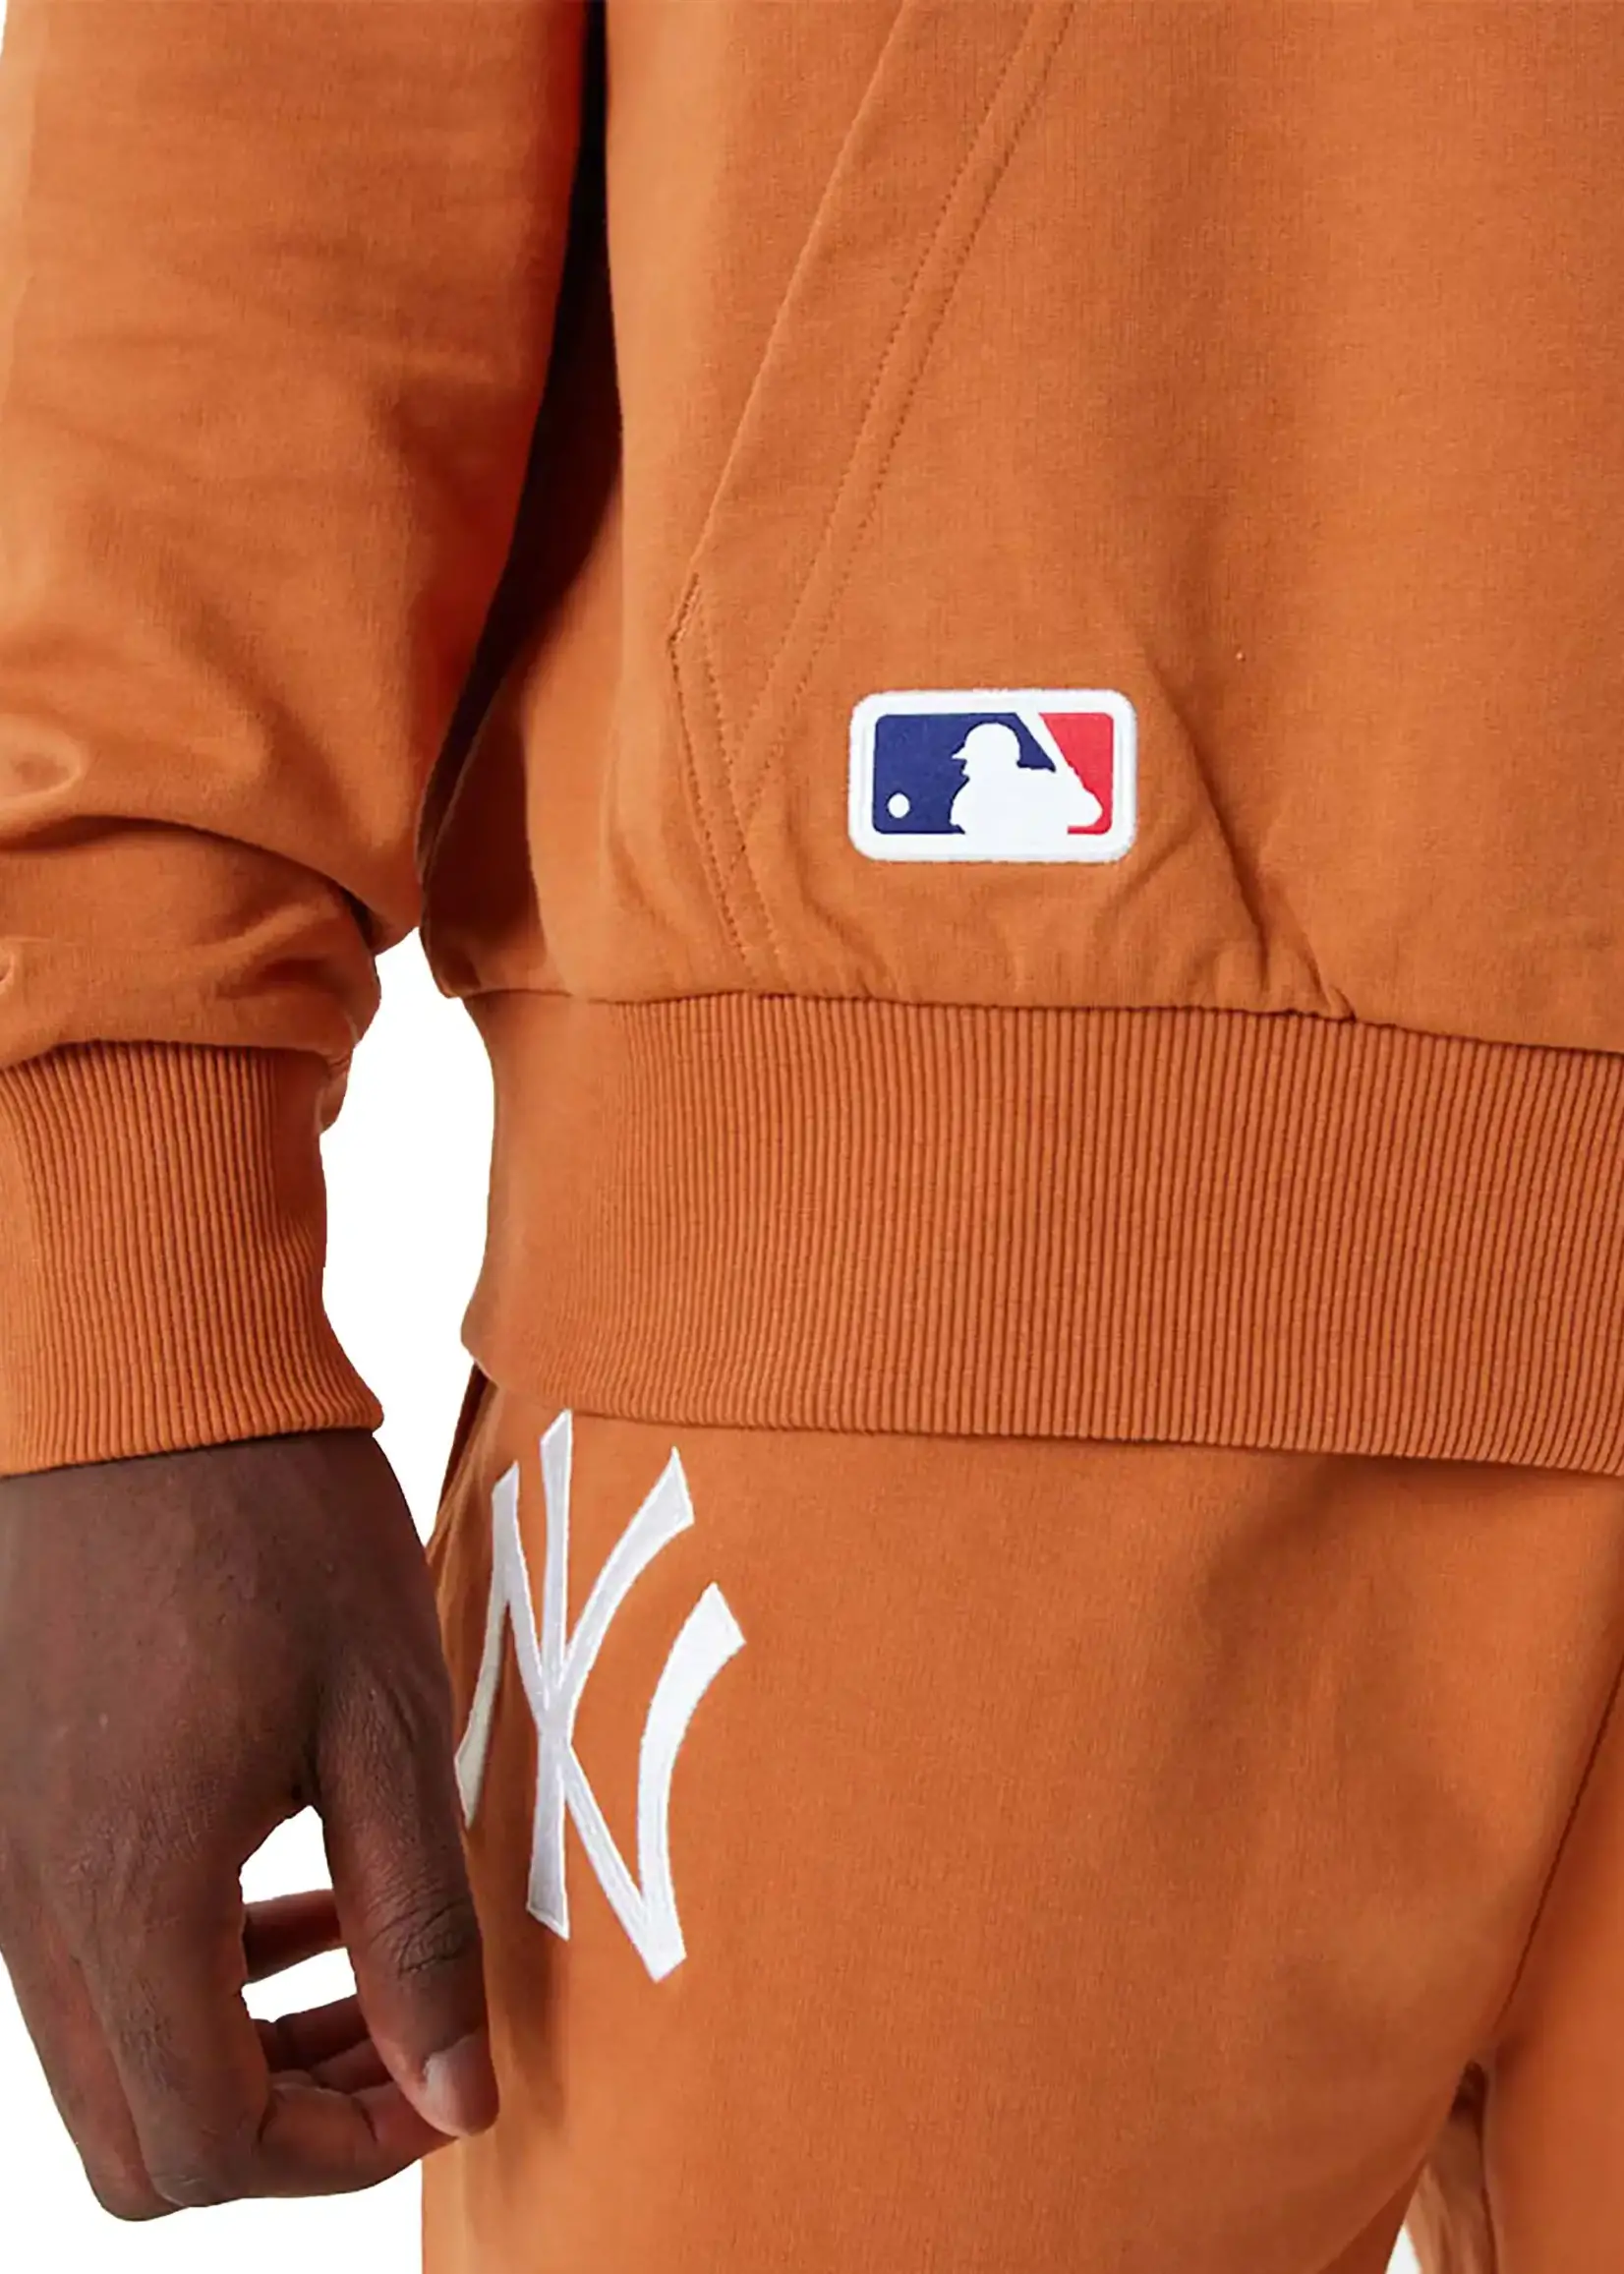 New Era New York Yankees League Essential Oversized Hoodie Orange